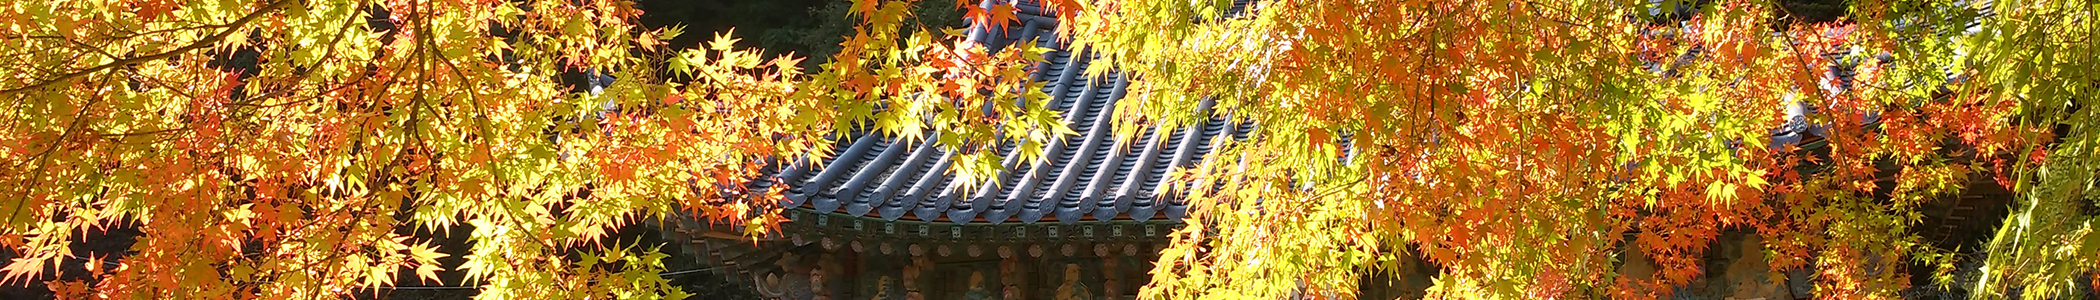 autumn foliage image